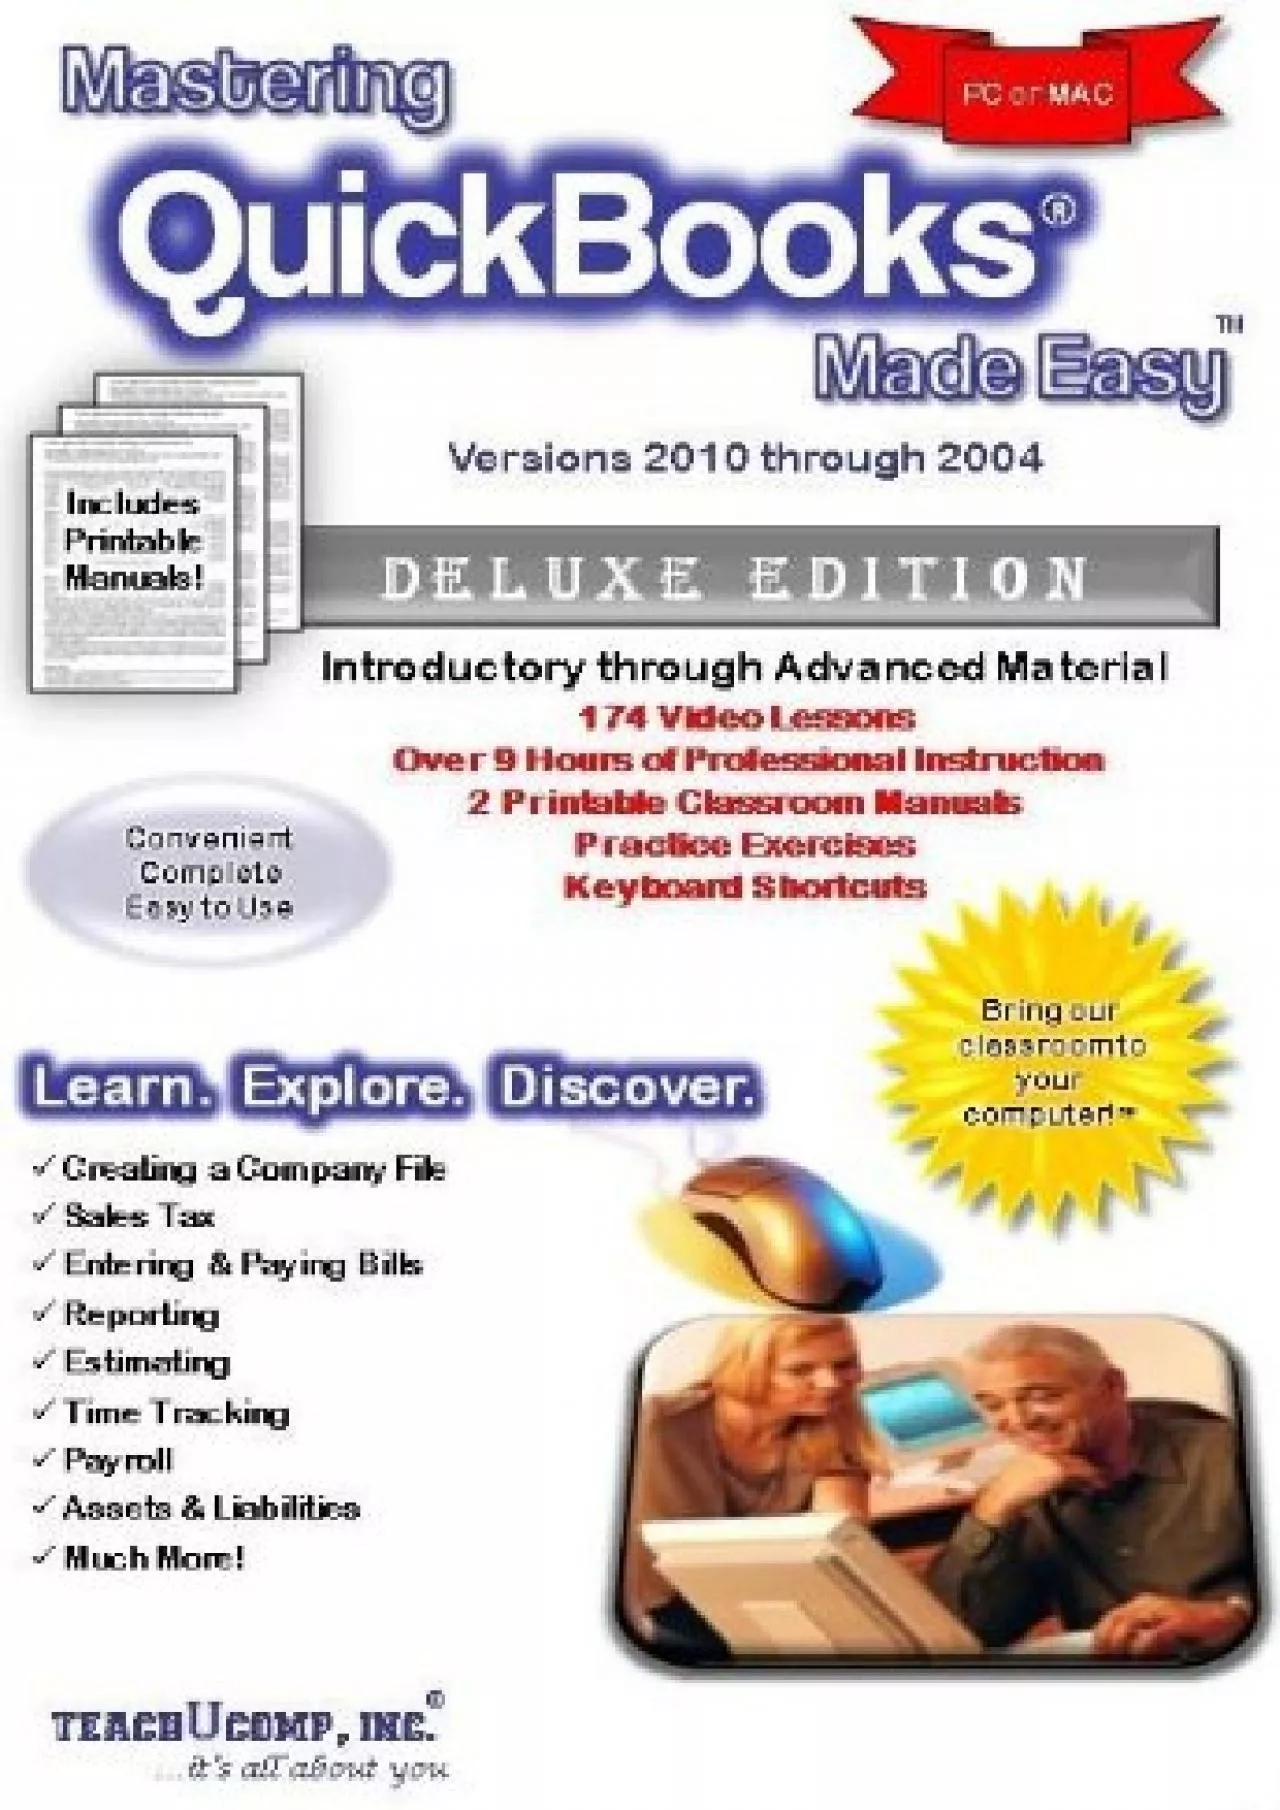 (BOOK)-Mastering QuickBooks Made Easy Training Tutorial v. 2010 through 2004 - How to